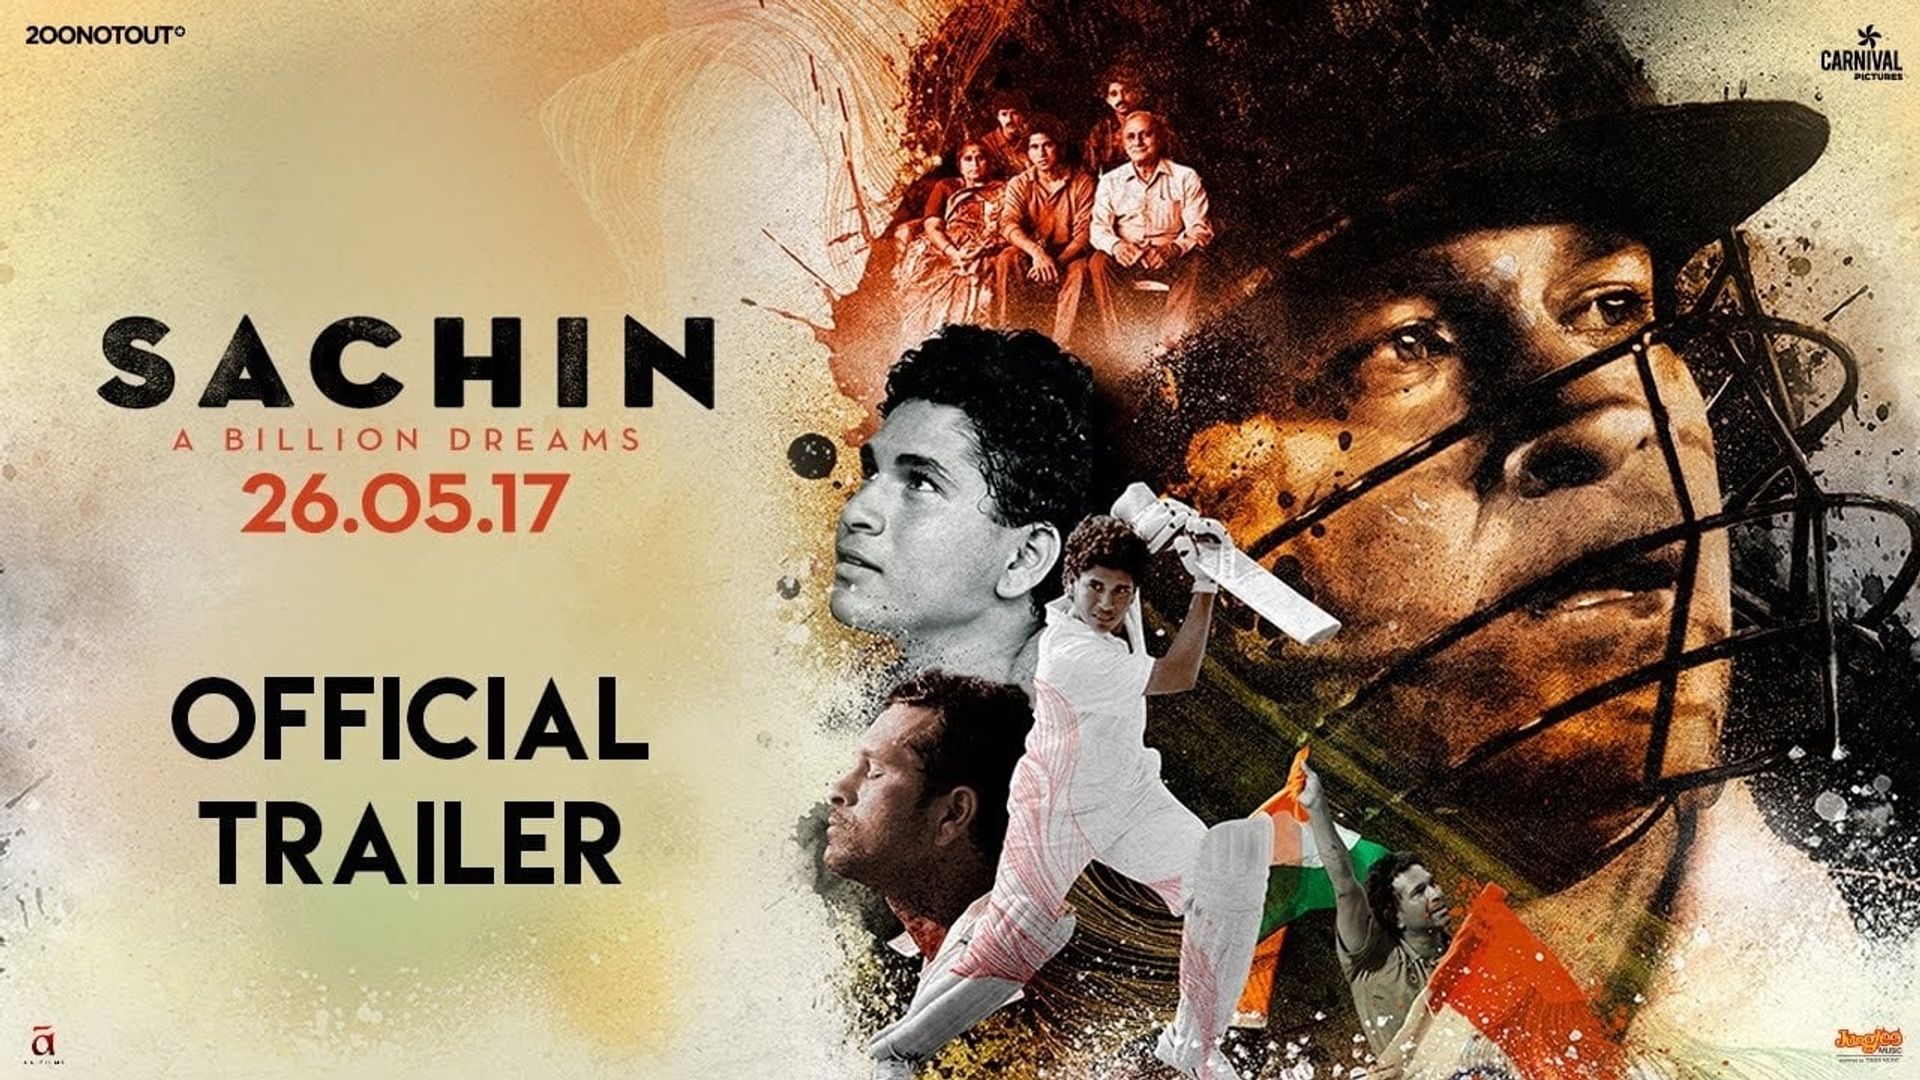 Sachin - A Billion Dreams background